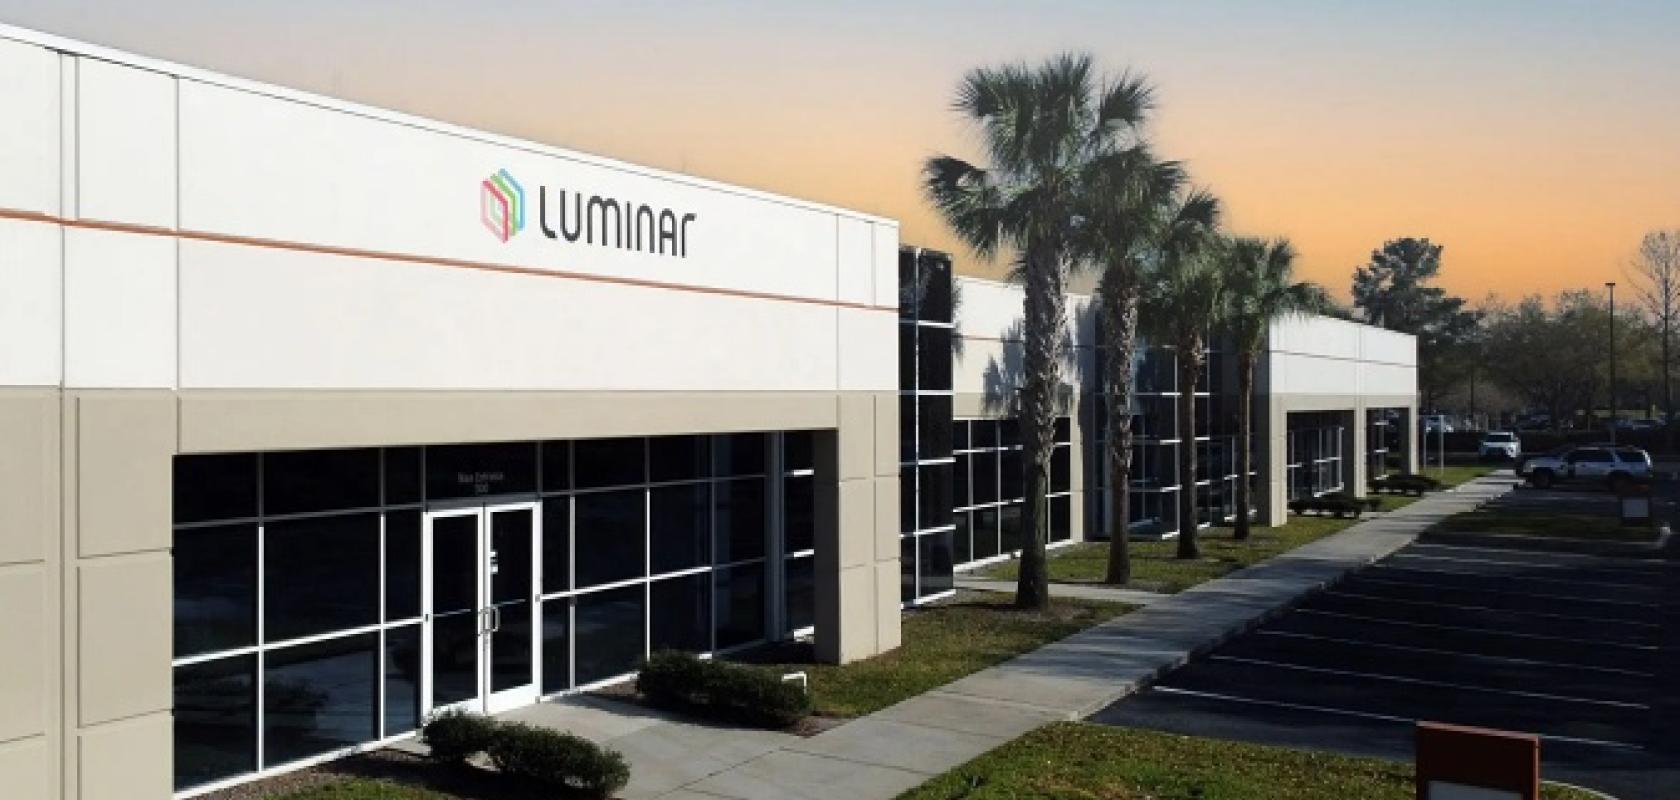 Cost-cuts and job losses across the board at many lidar development firms including Luminar